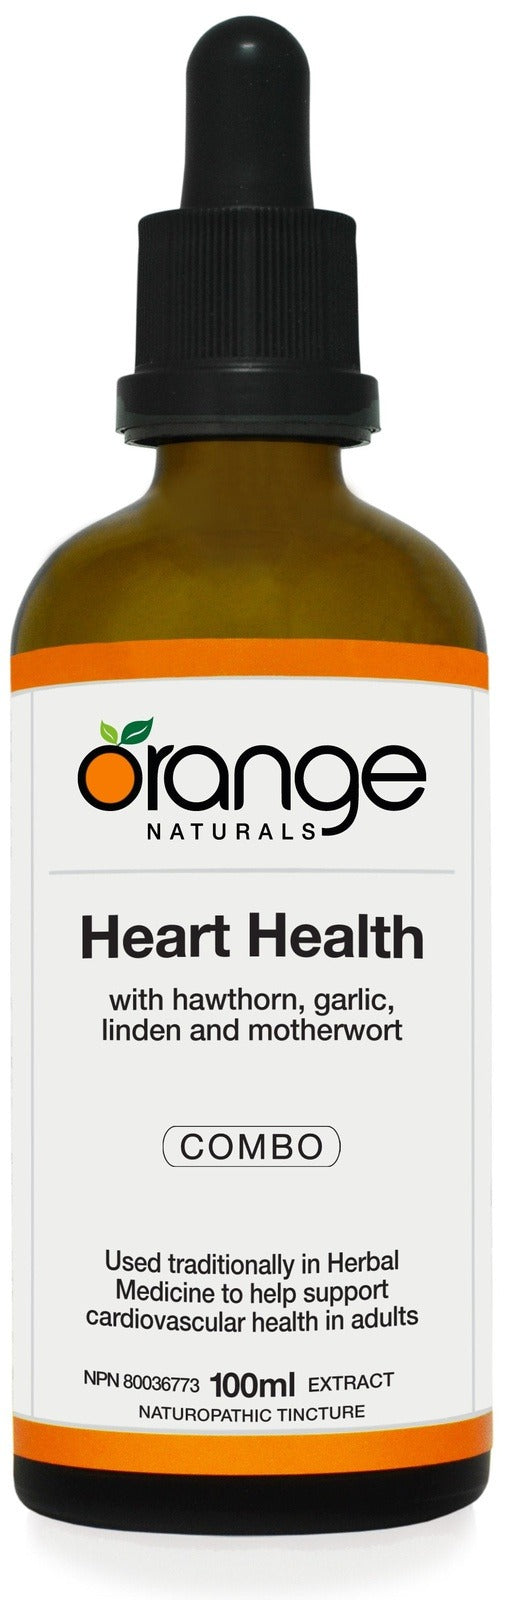 Orange Naturals Heart Health Combo 100 mL Image 1